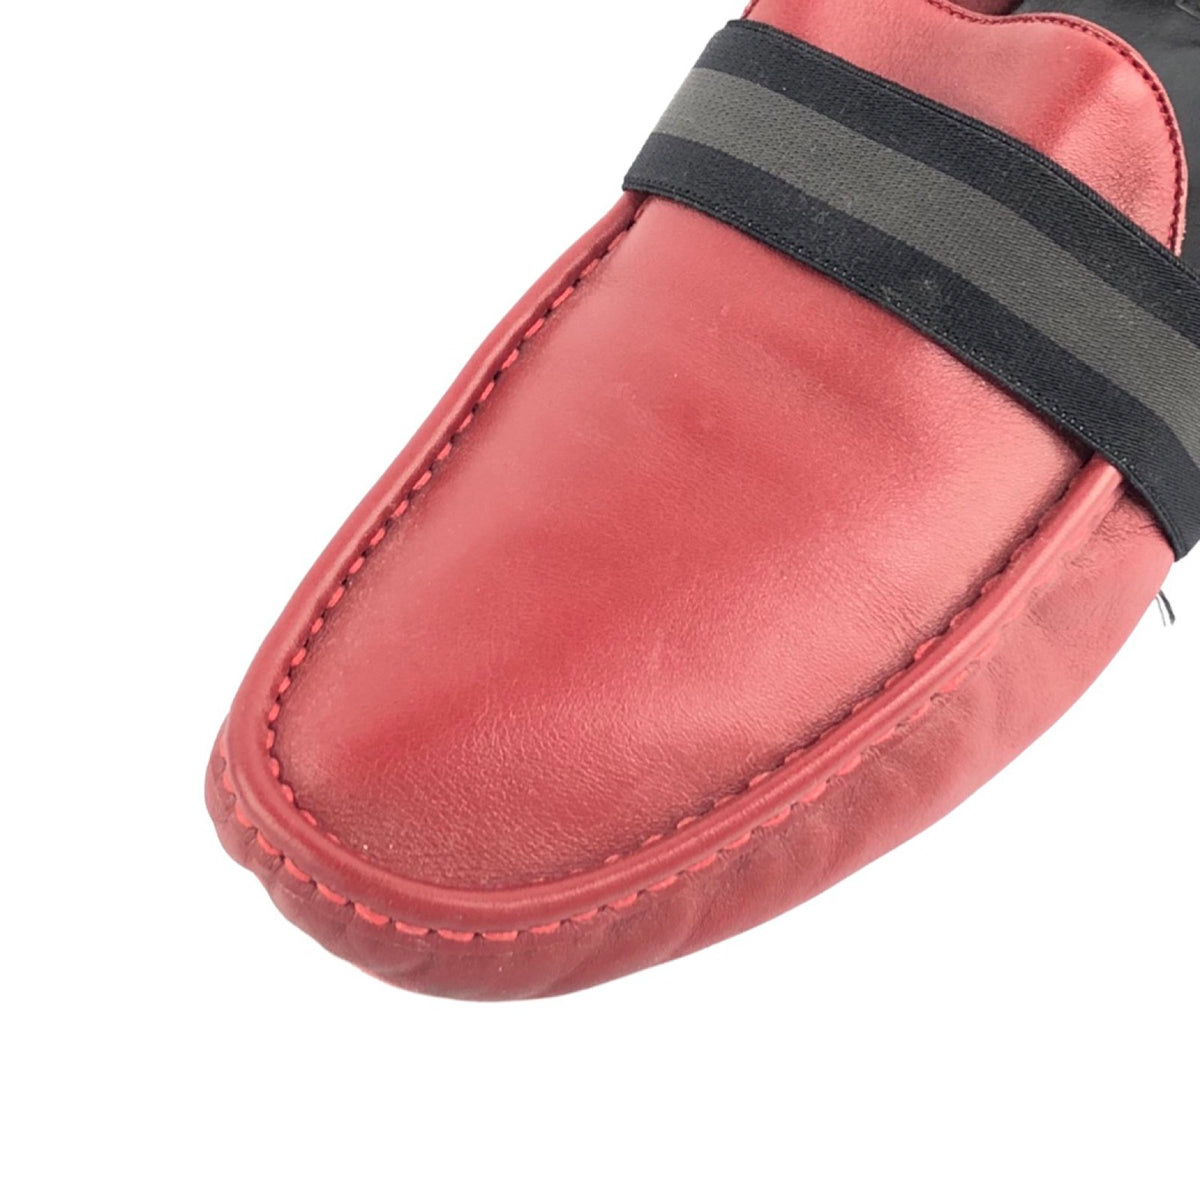 GUCCI Red Leather Viaggio Men&#39;s Loafers Sz 8.5